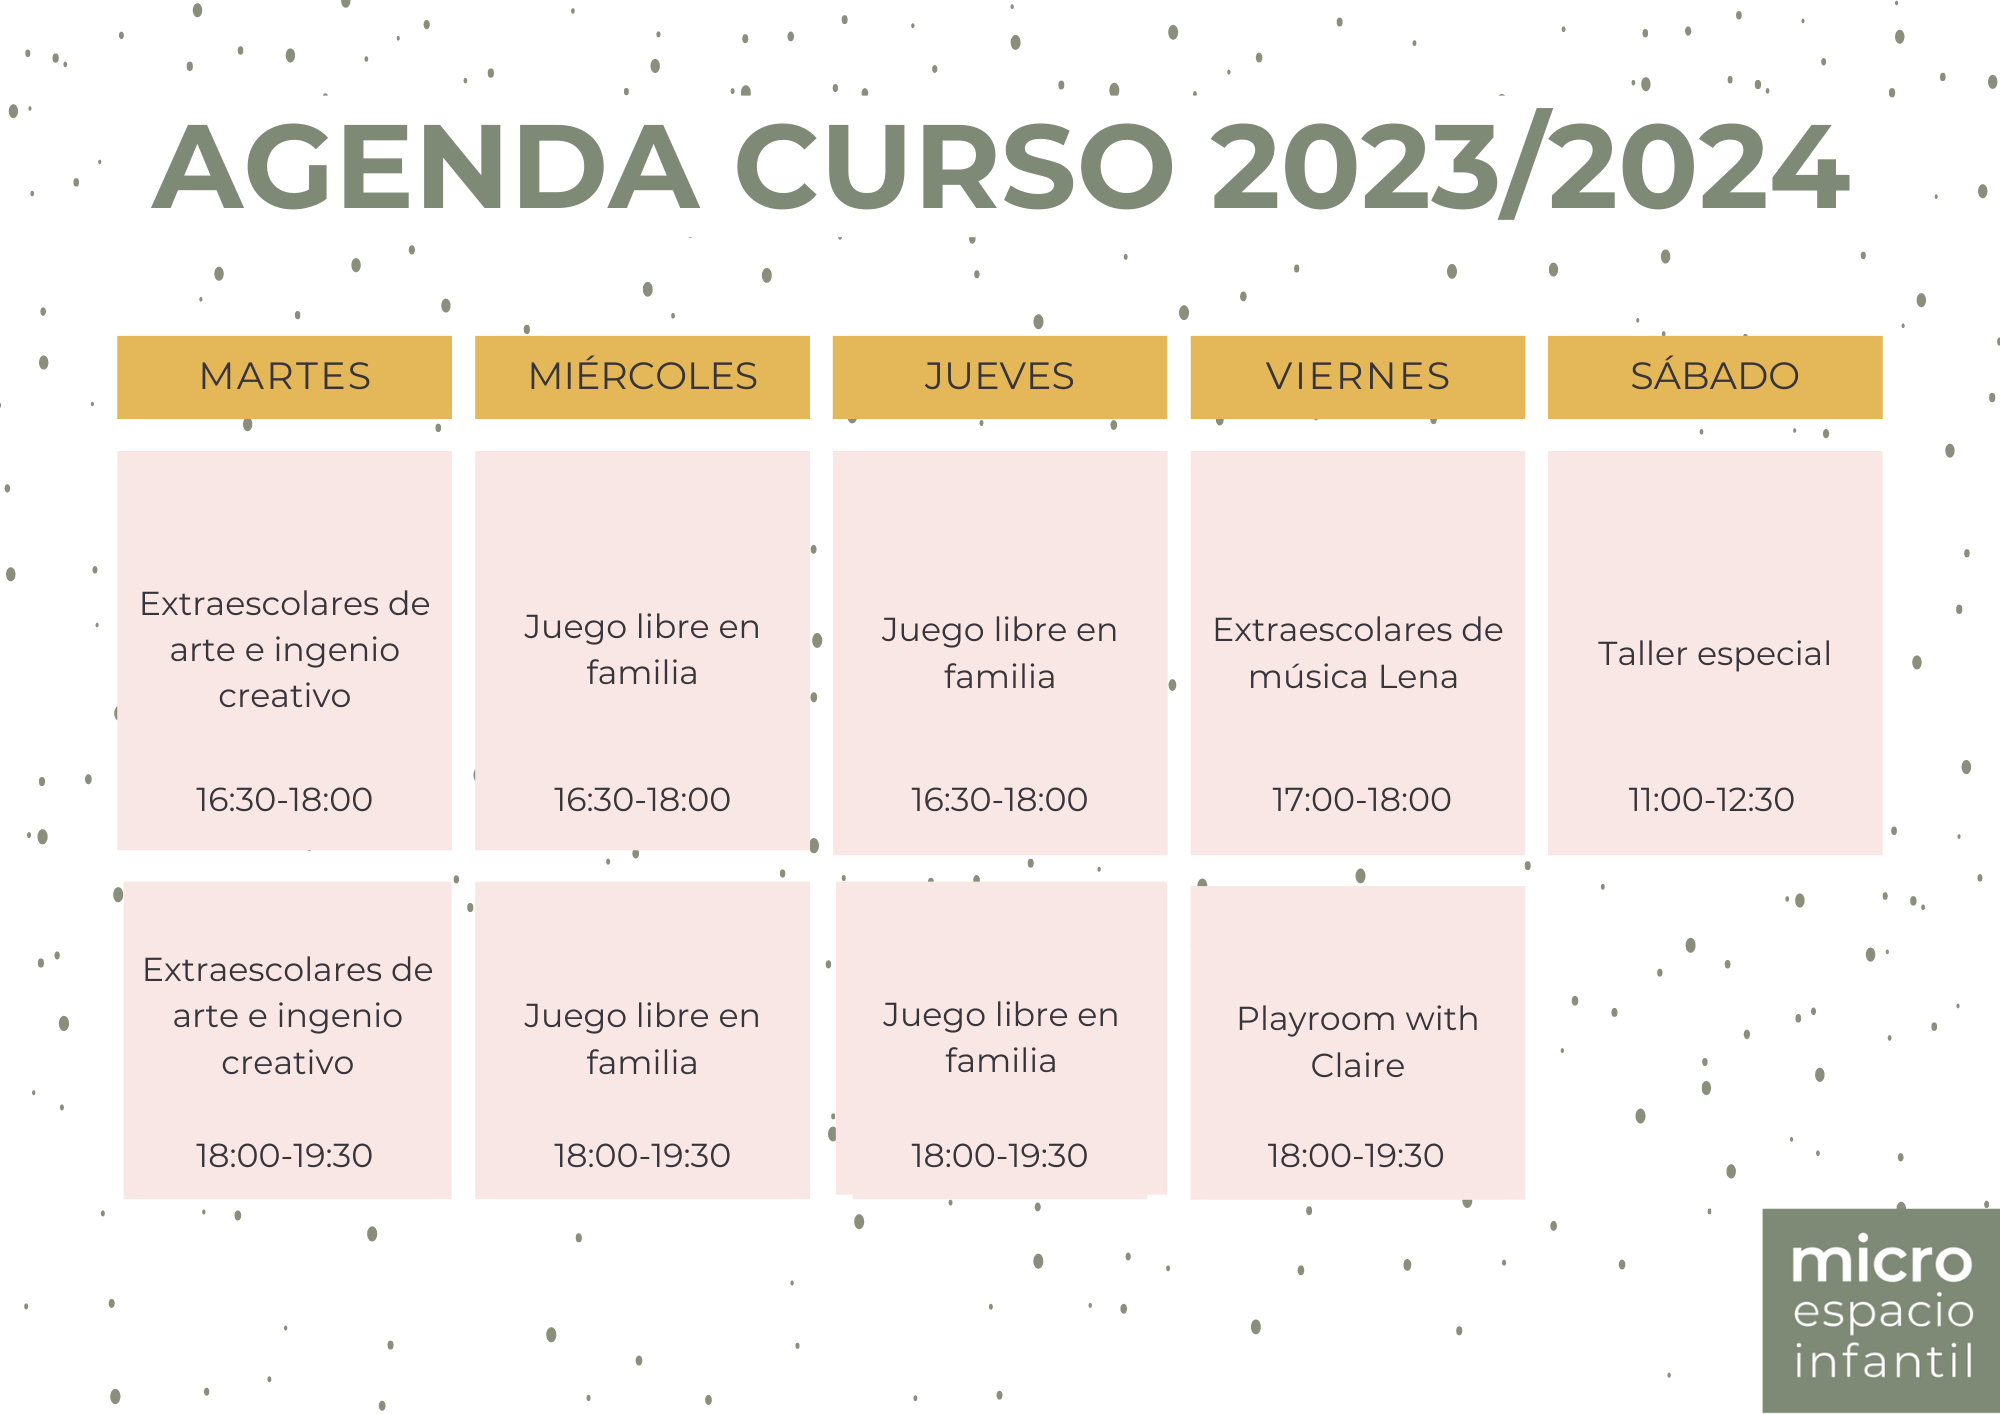 Agenda de micro 2023/2024